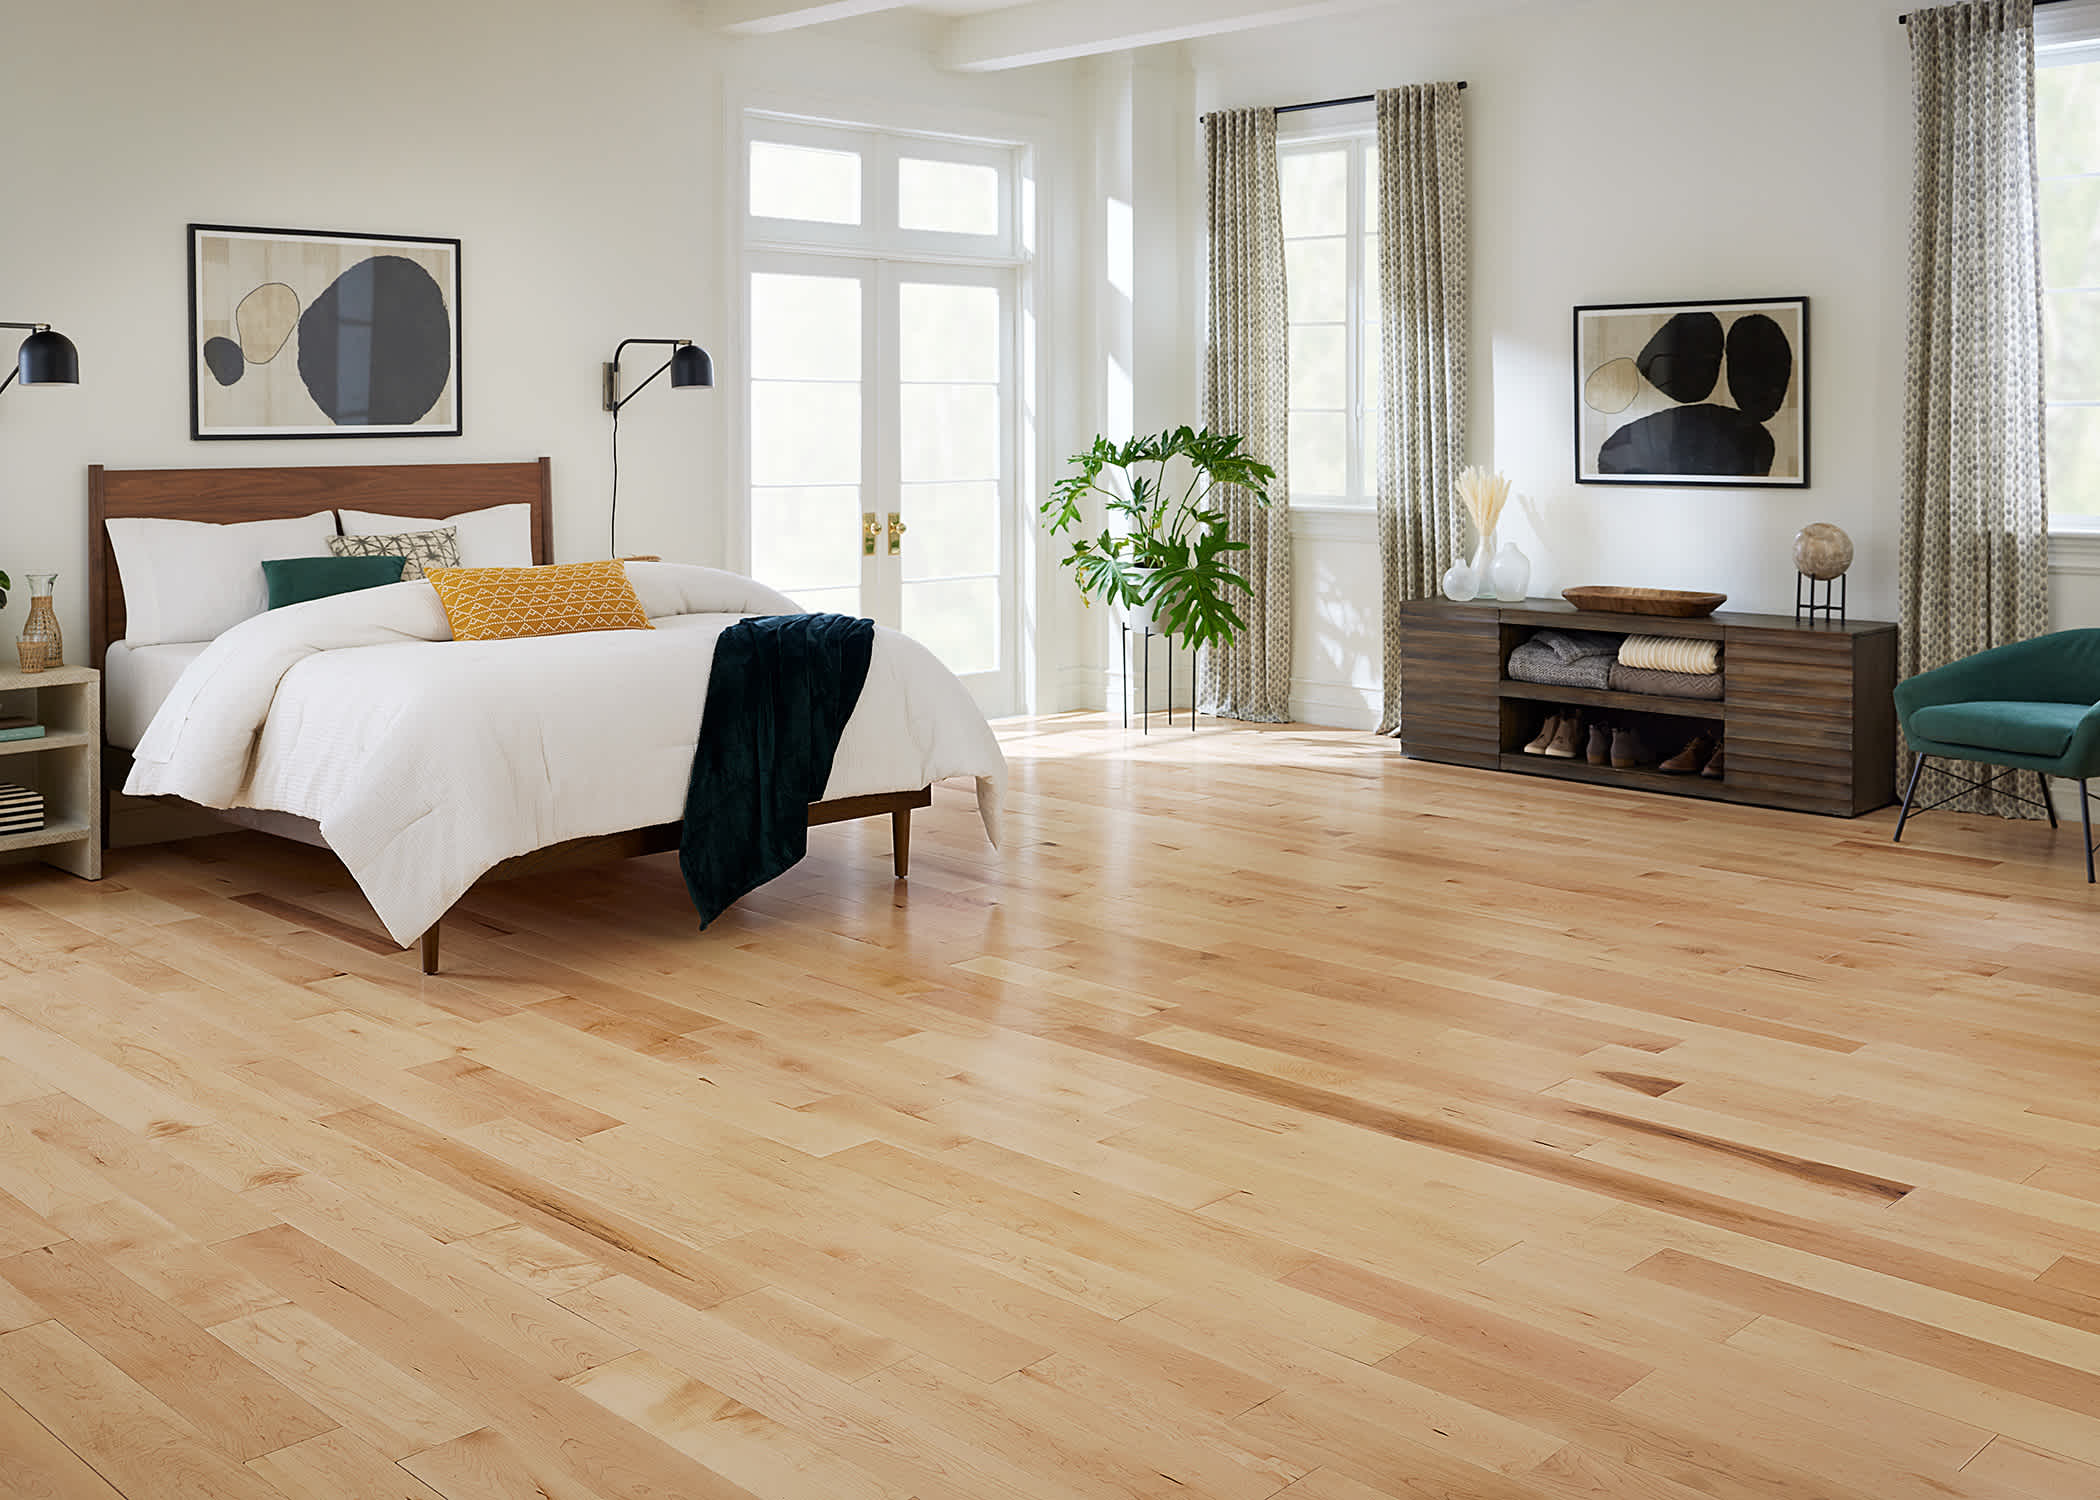 blonde hardwood floor in bedroom with dark brown wood headboard with white bedding plus dark brown low dresser and dark green accent chair